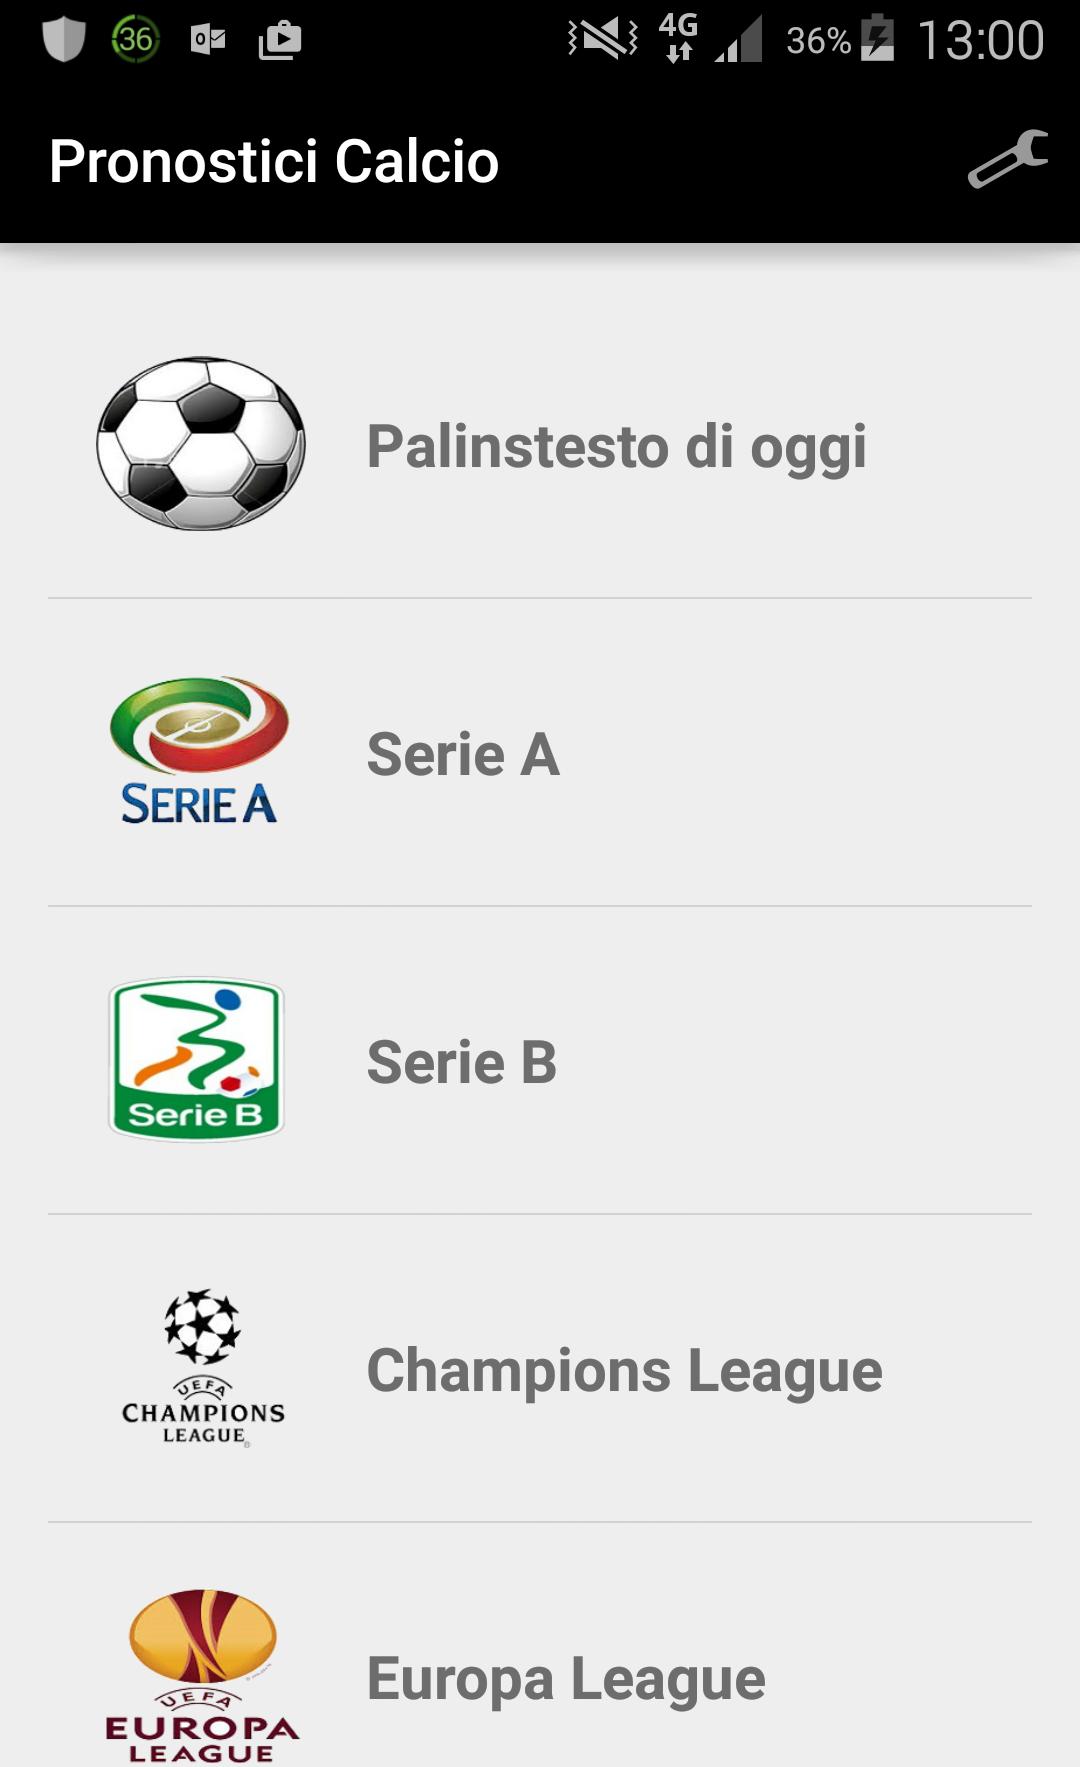 Pronostici Calcio for Android - APK Download